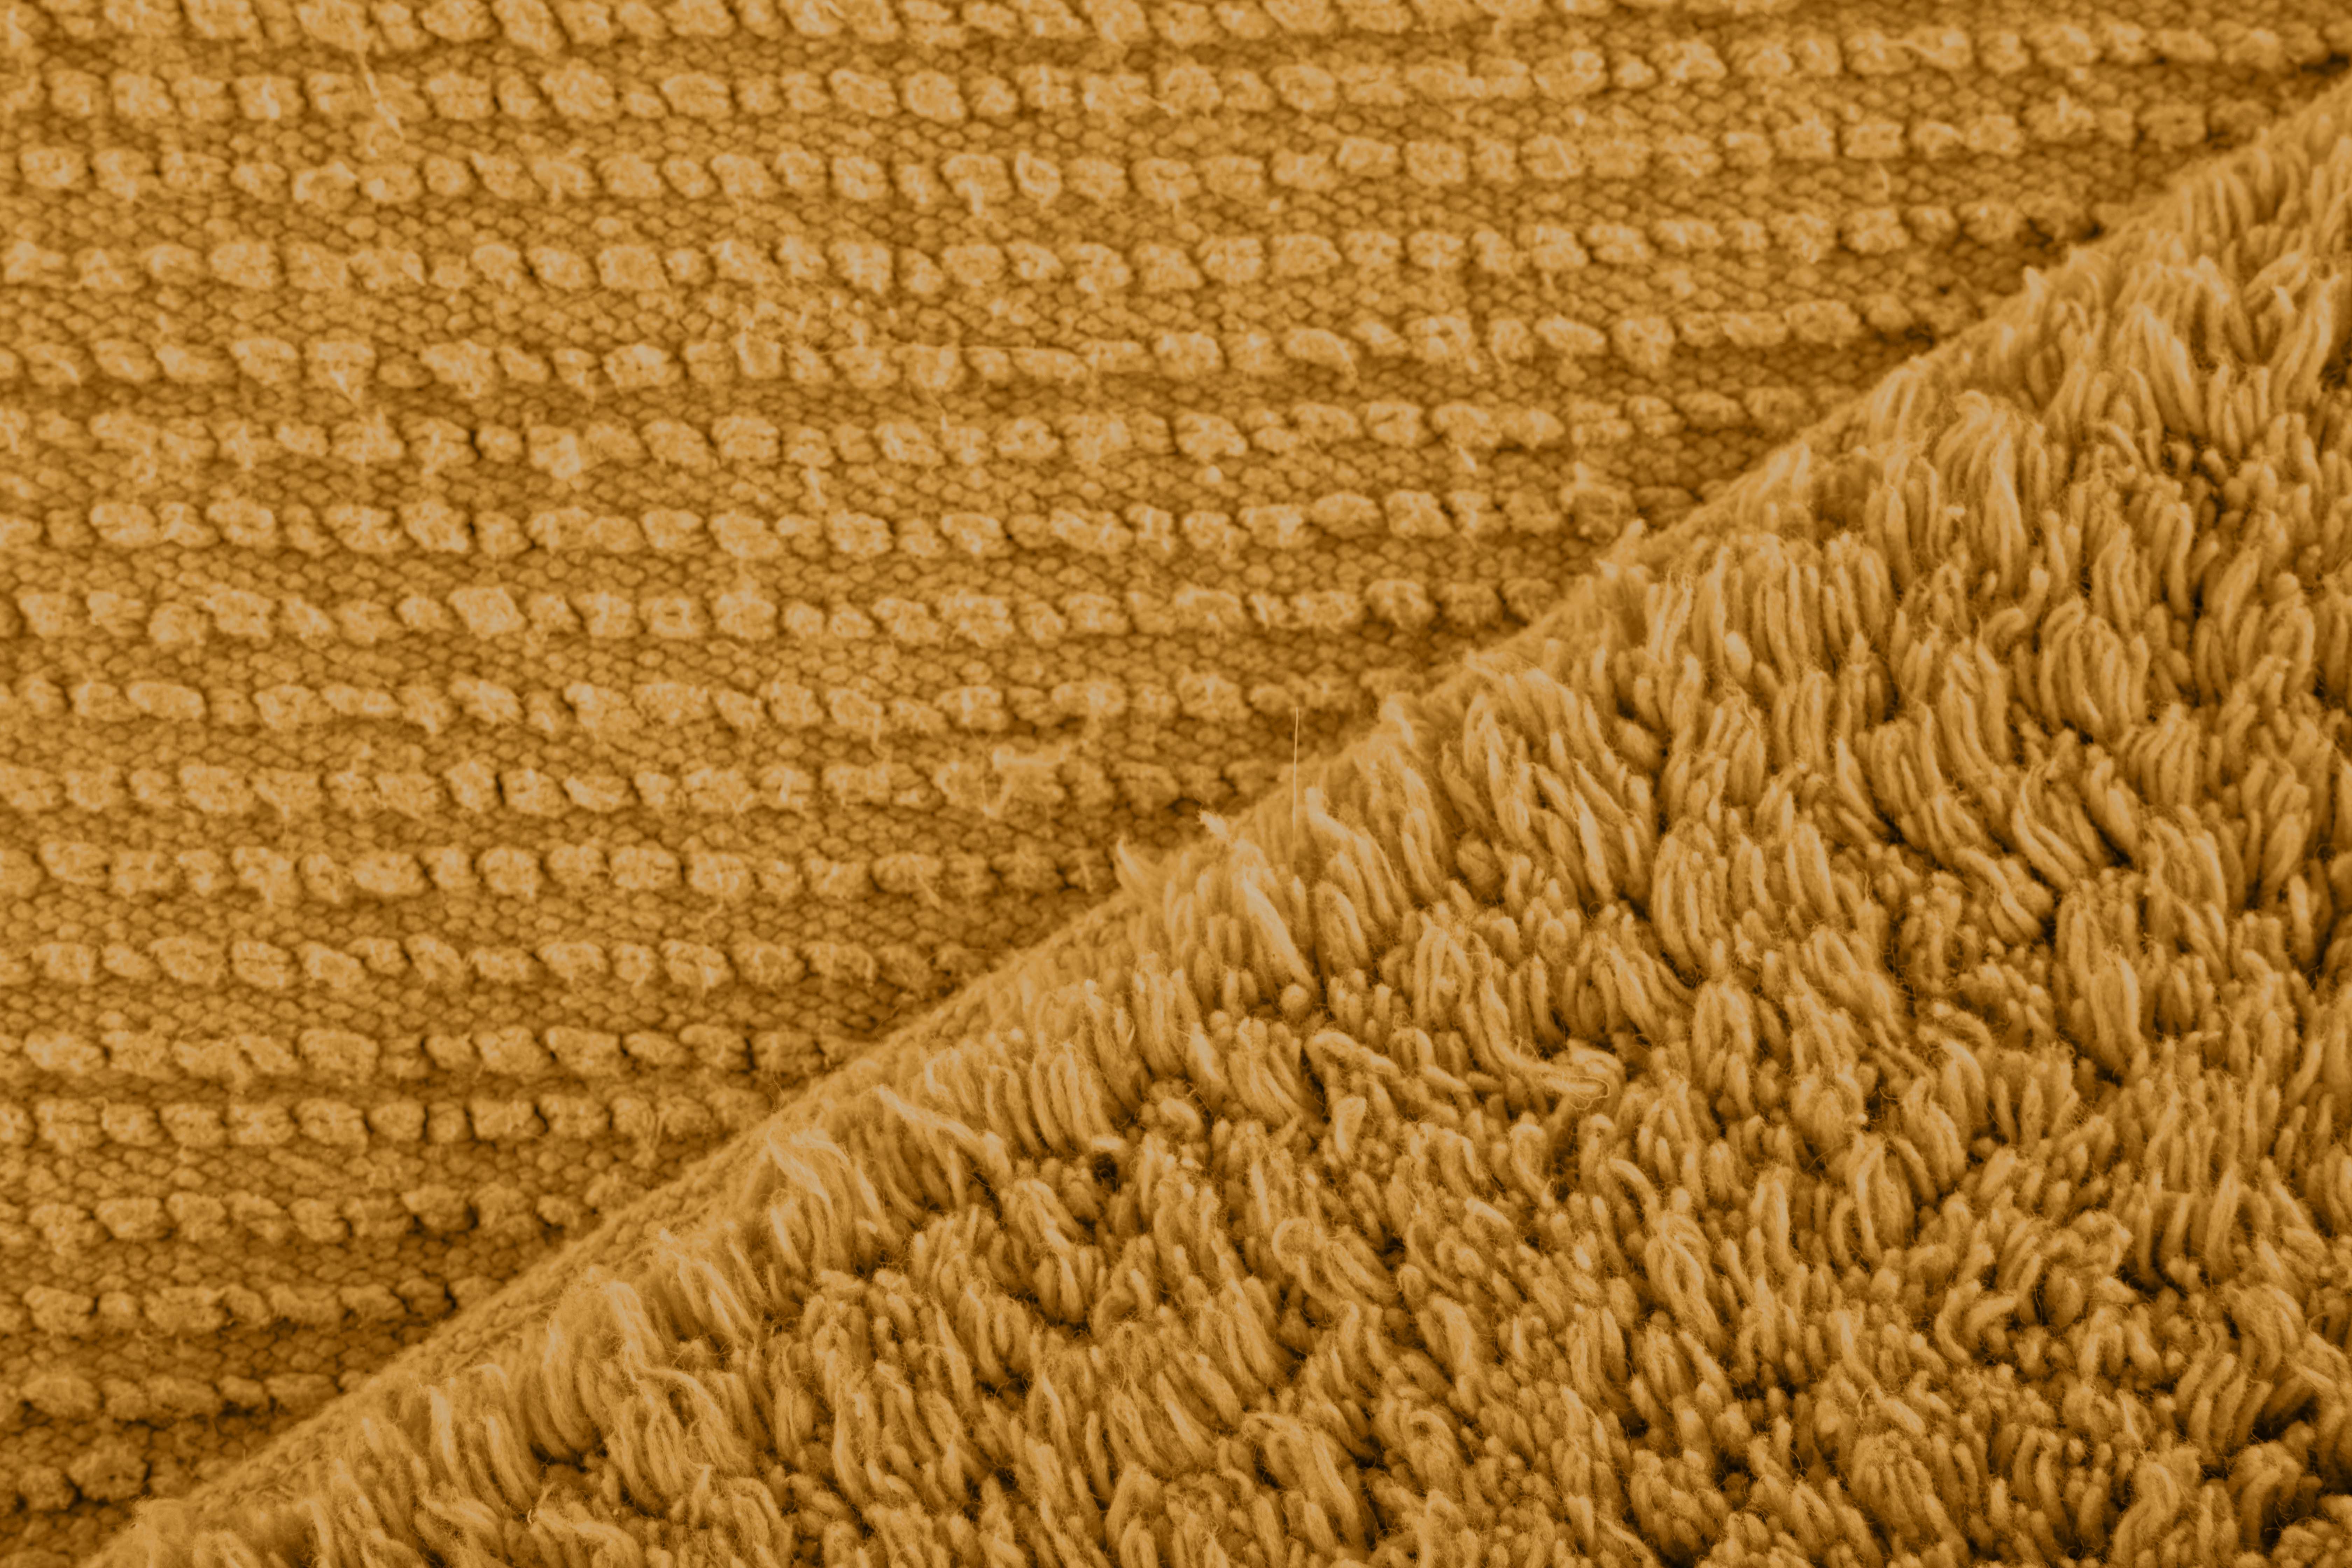 Bath carpet RIVA - cotton anti-slip, 60x100cm, camel